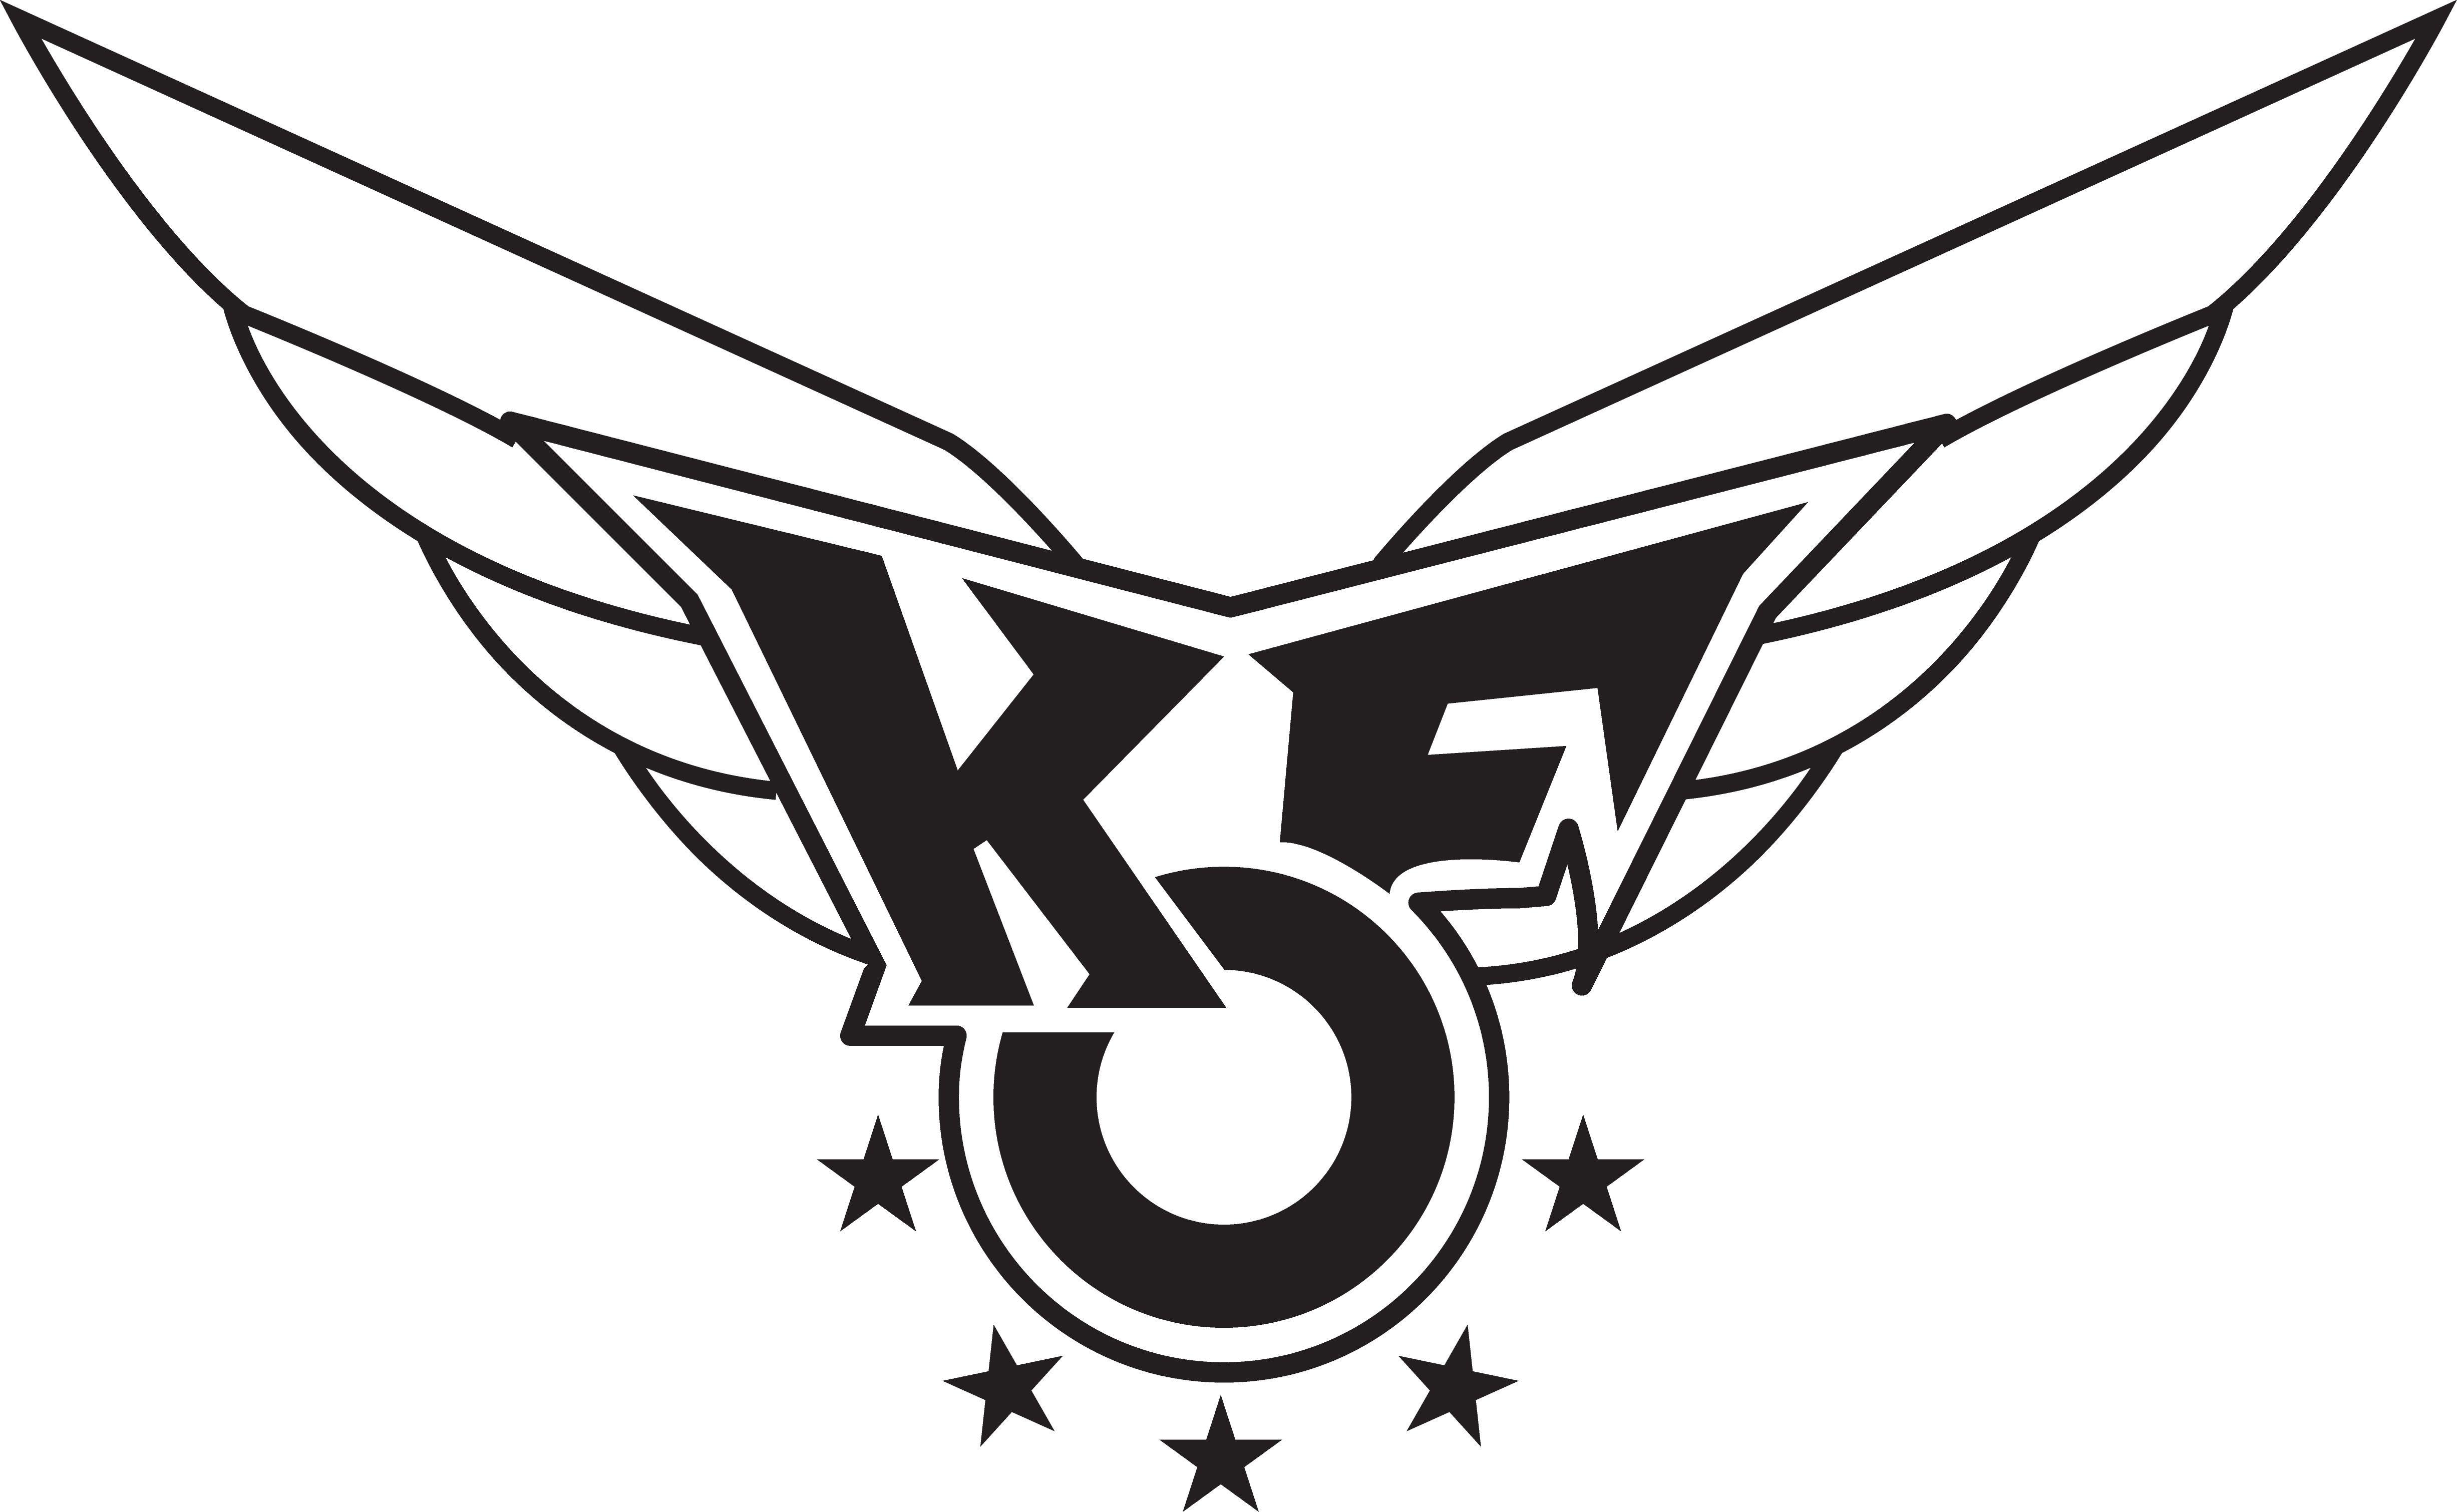 KOF Logo - logo king of fighters | jimmy jordan m | King of fighters, King y ...